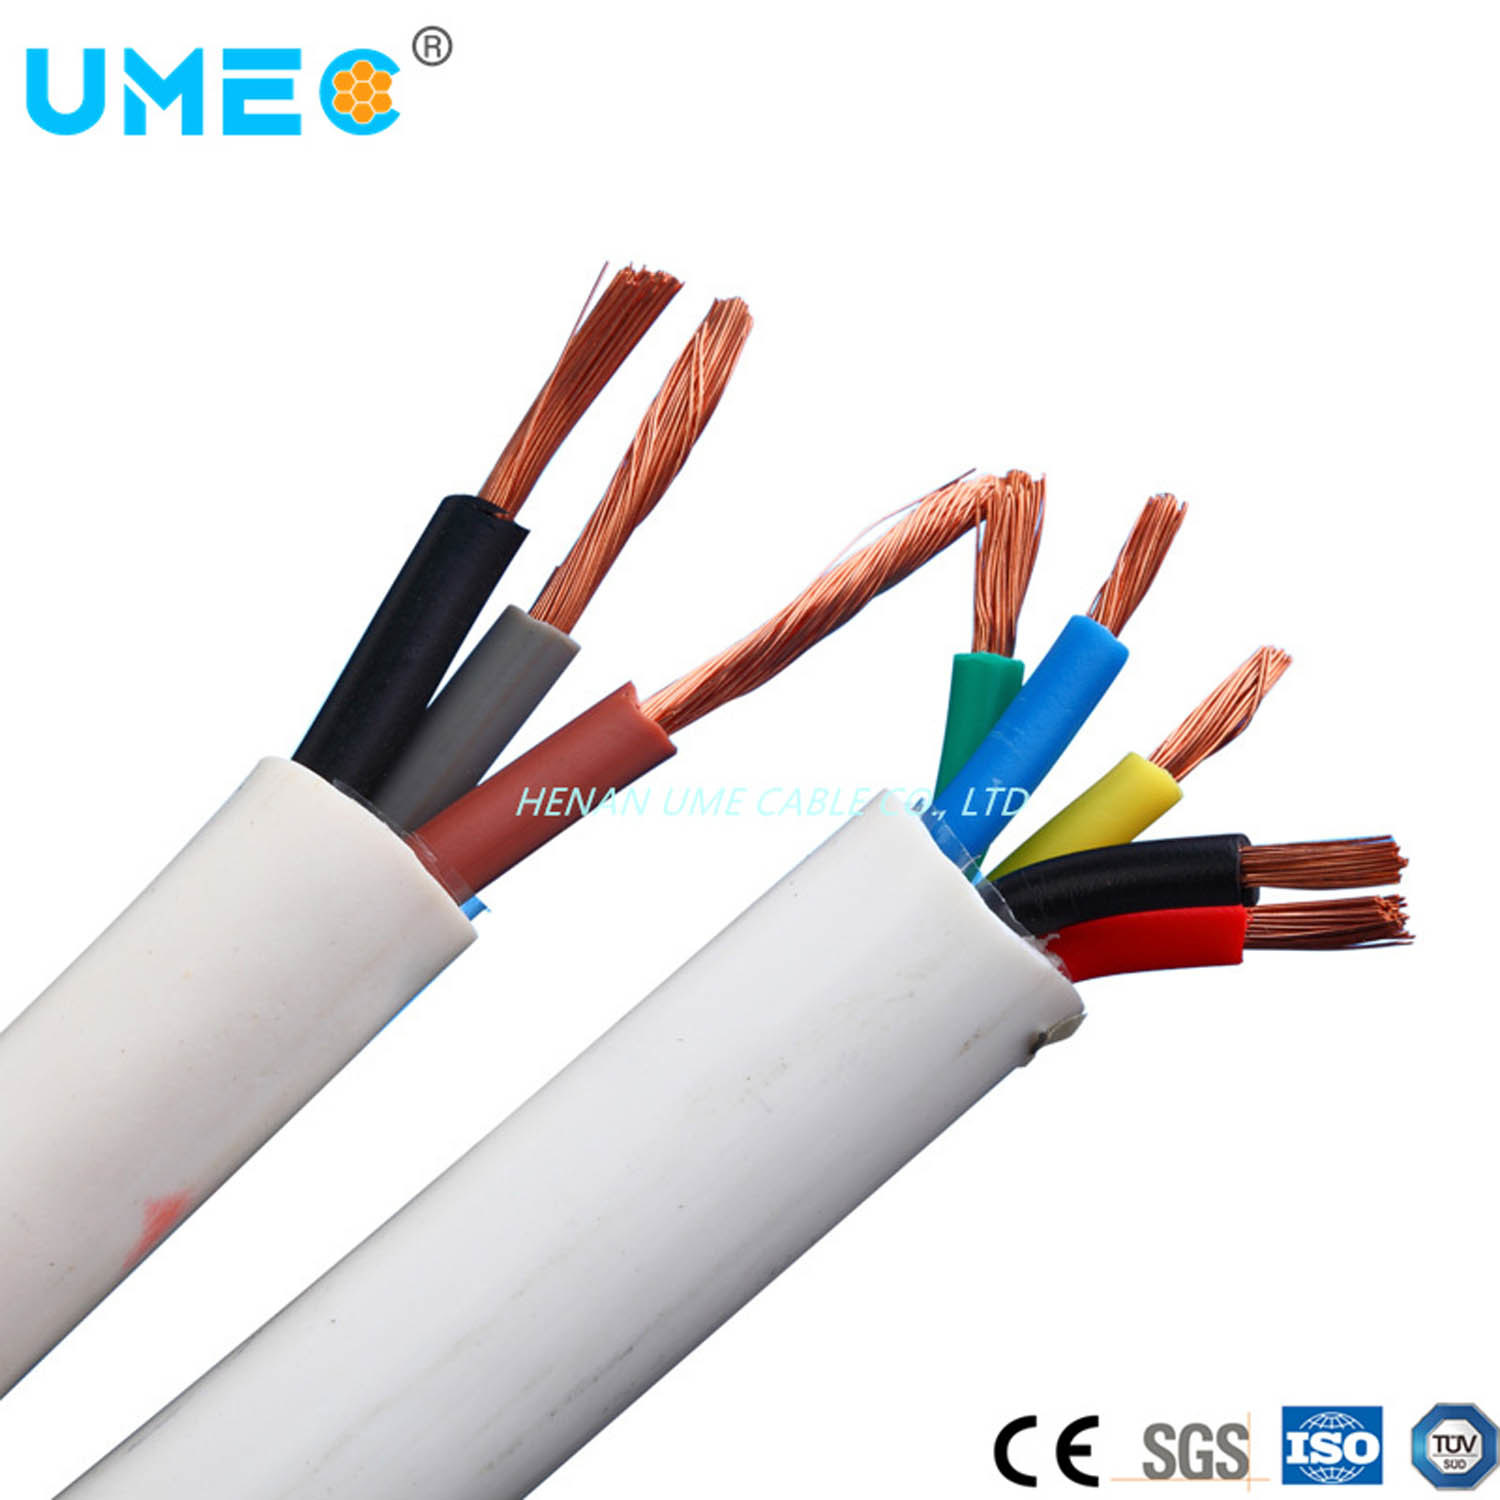 
                0,5 mm2 de 0,75 mm2 de múltiples núcleos aislados con PVC, recubierto de PVC flexible Cable H03vvf cable
            